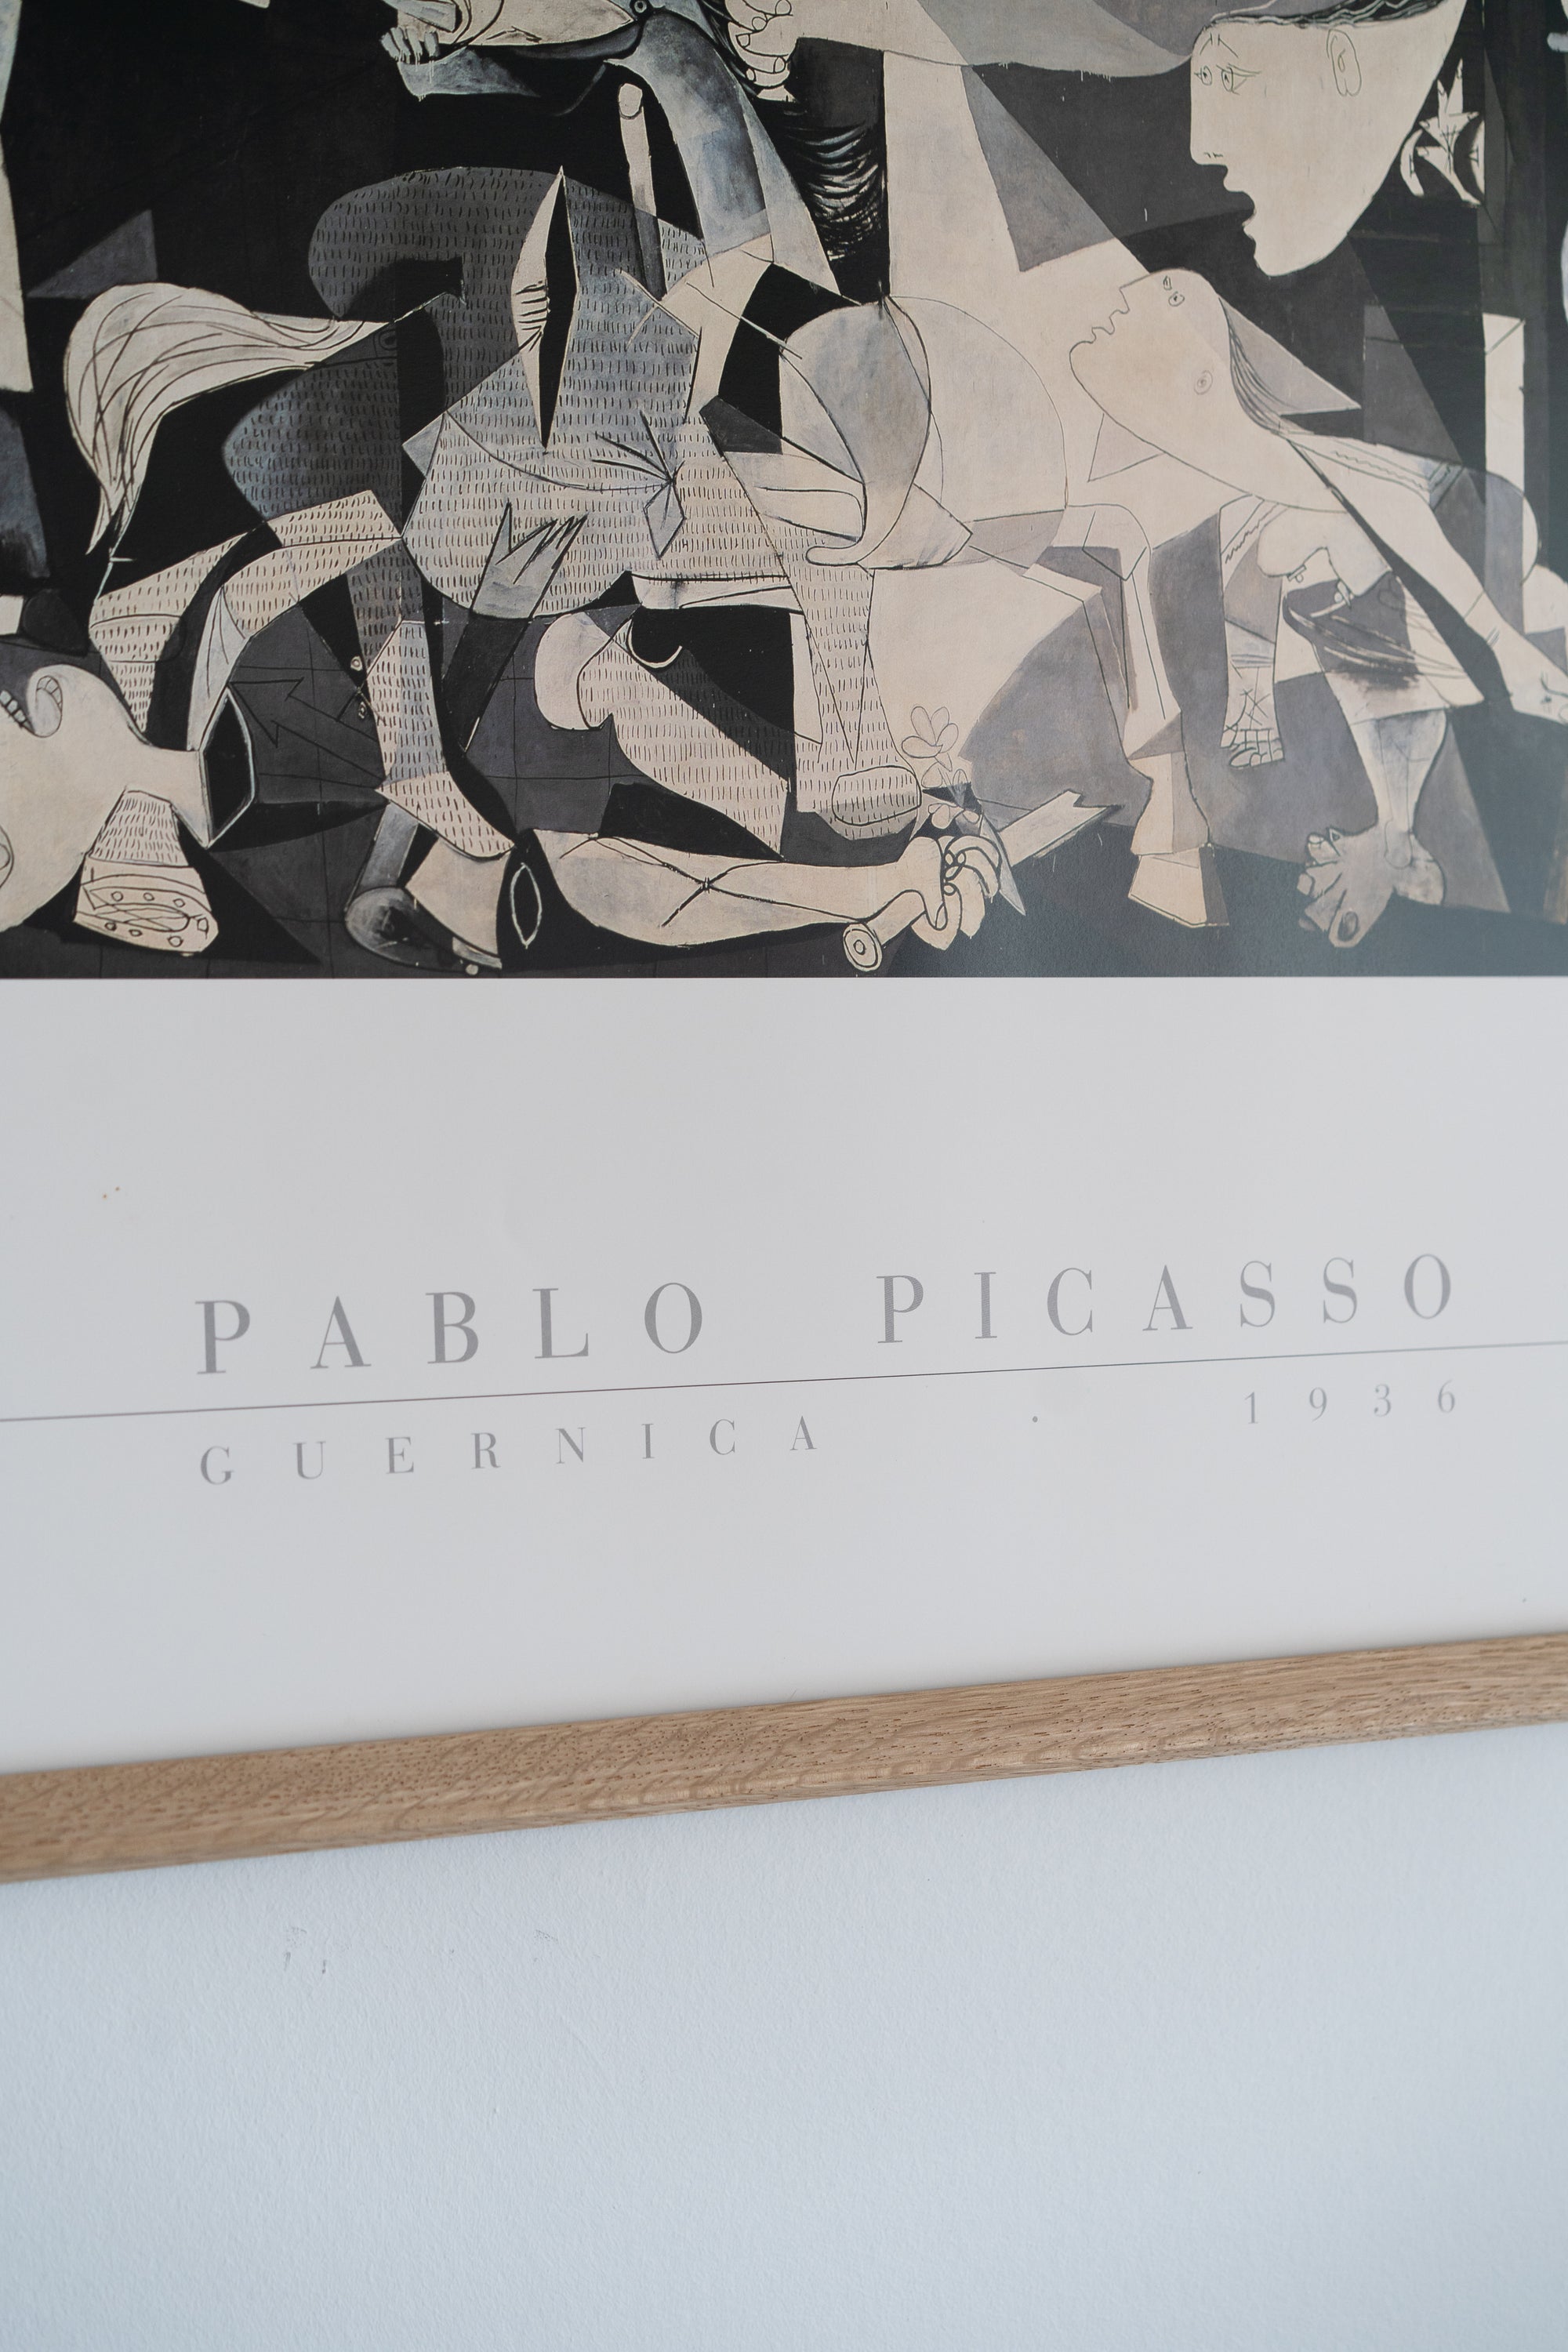 Pablo Picasso 'Guernica' (1937) poster print